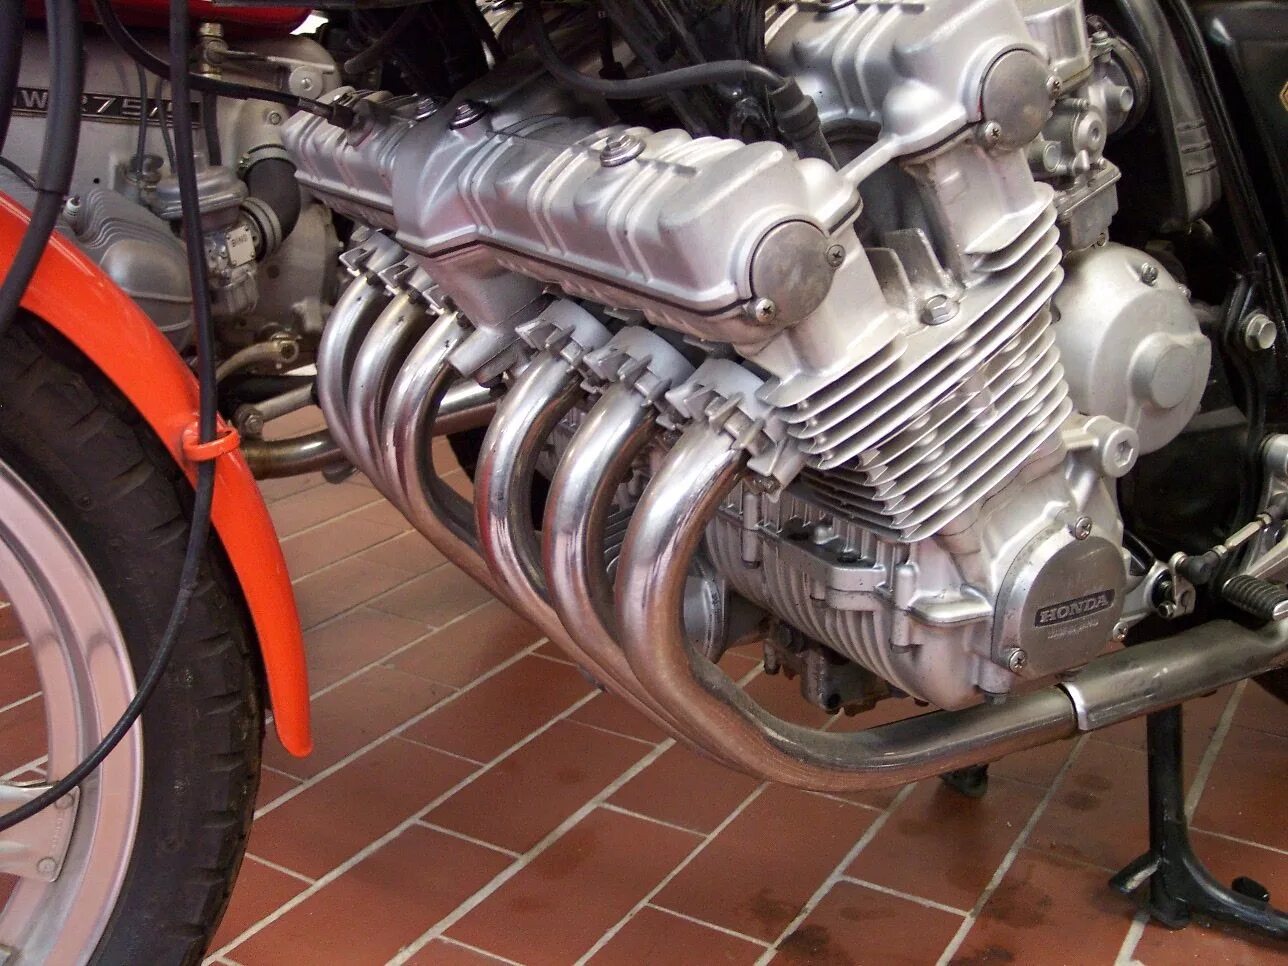 Двигатель honda мотоцикл. 6 Цилиндровый мотоцикл Honda. 4 Цилиндровый мотоцикл Урал. Engine Honda cbx750. Двигатель Урал 750сс.